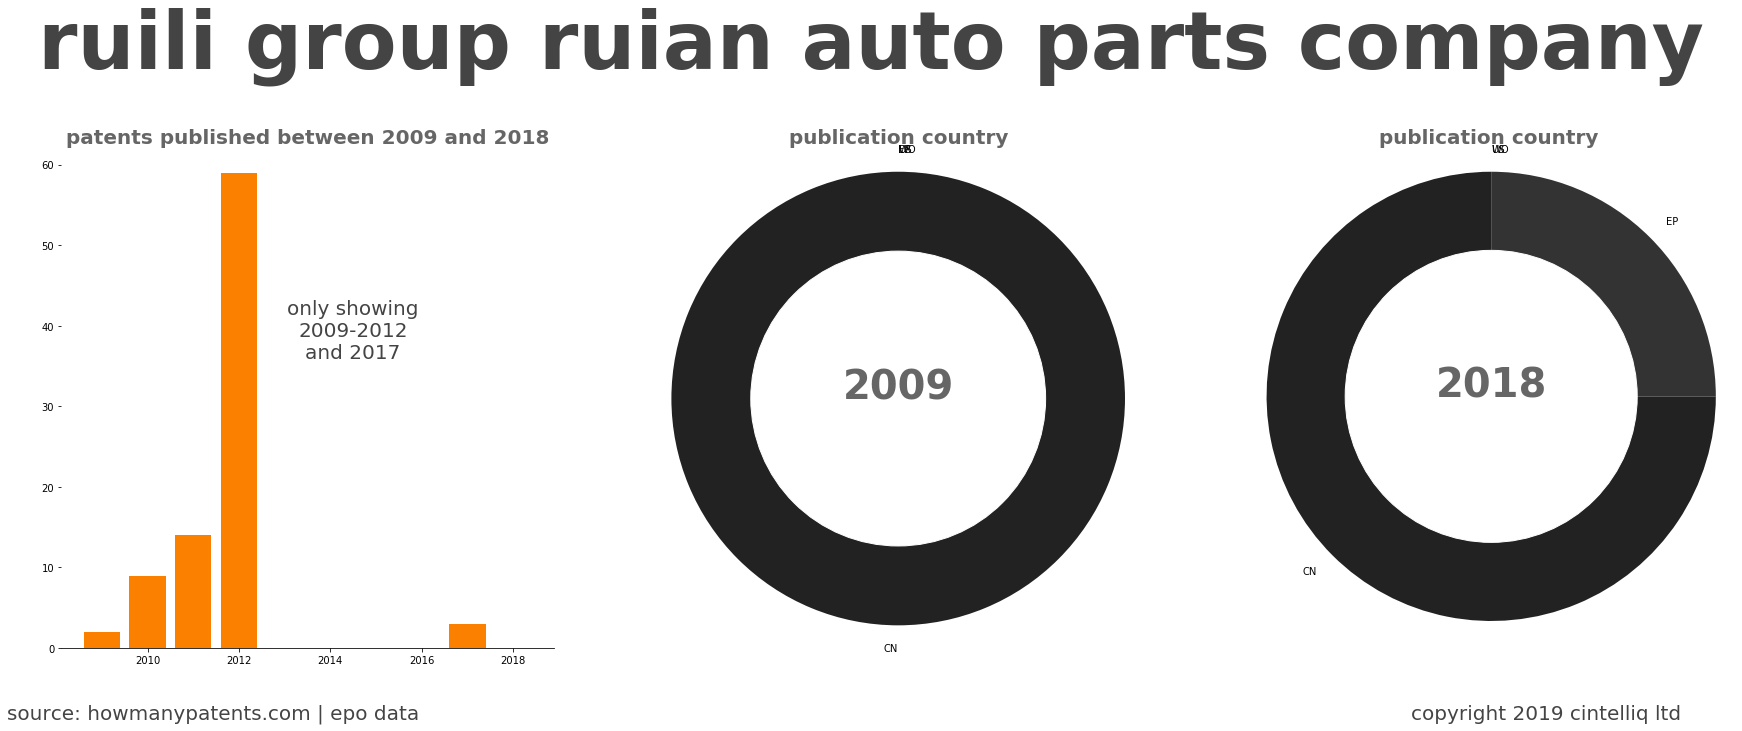 summary of patents for Ruili Group Ruian Auto Parts Company